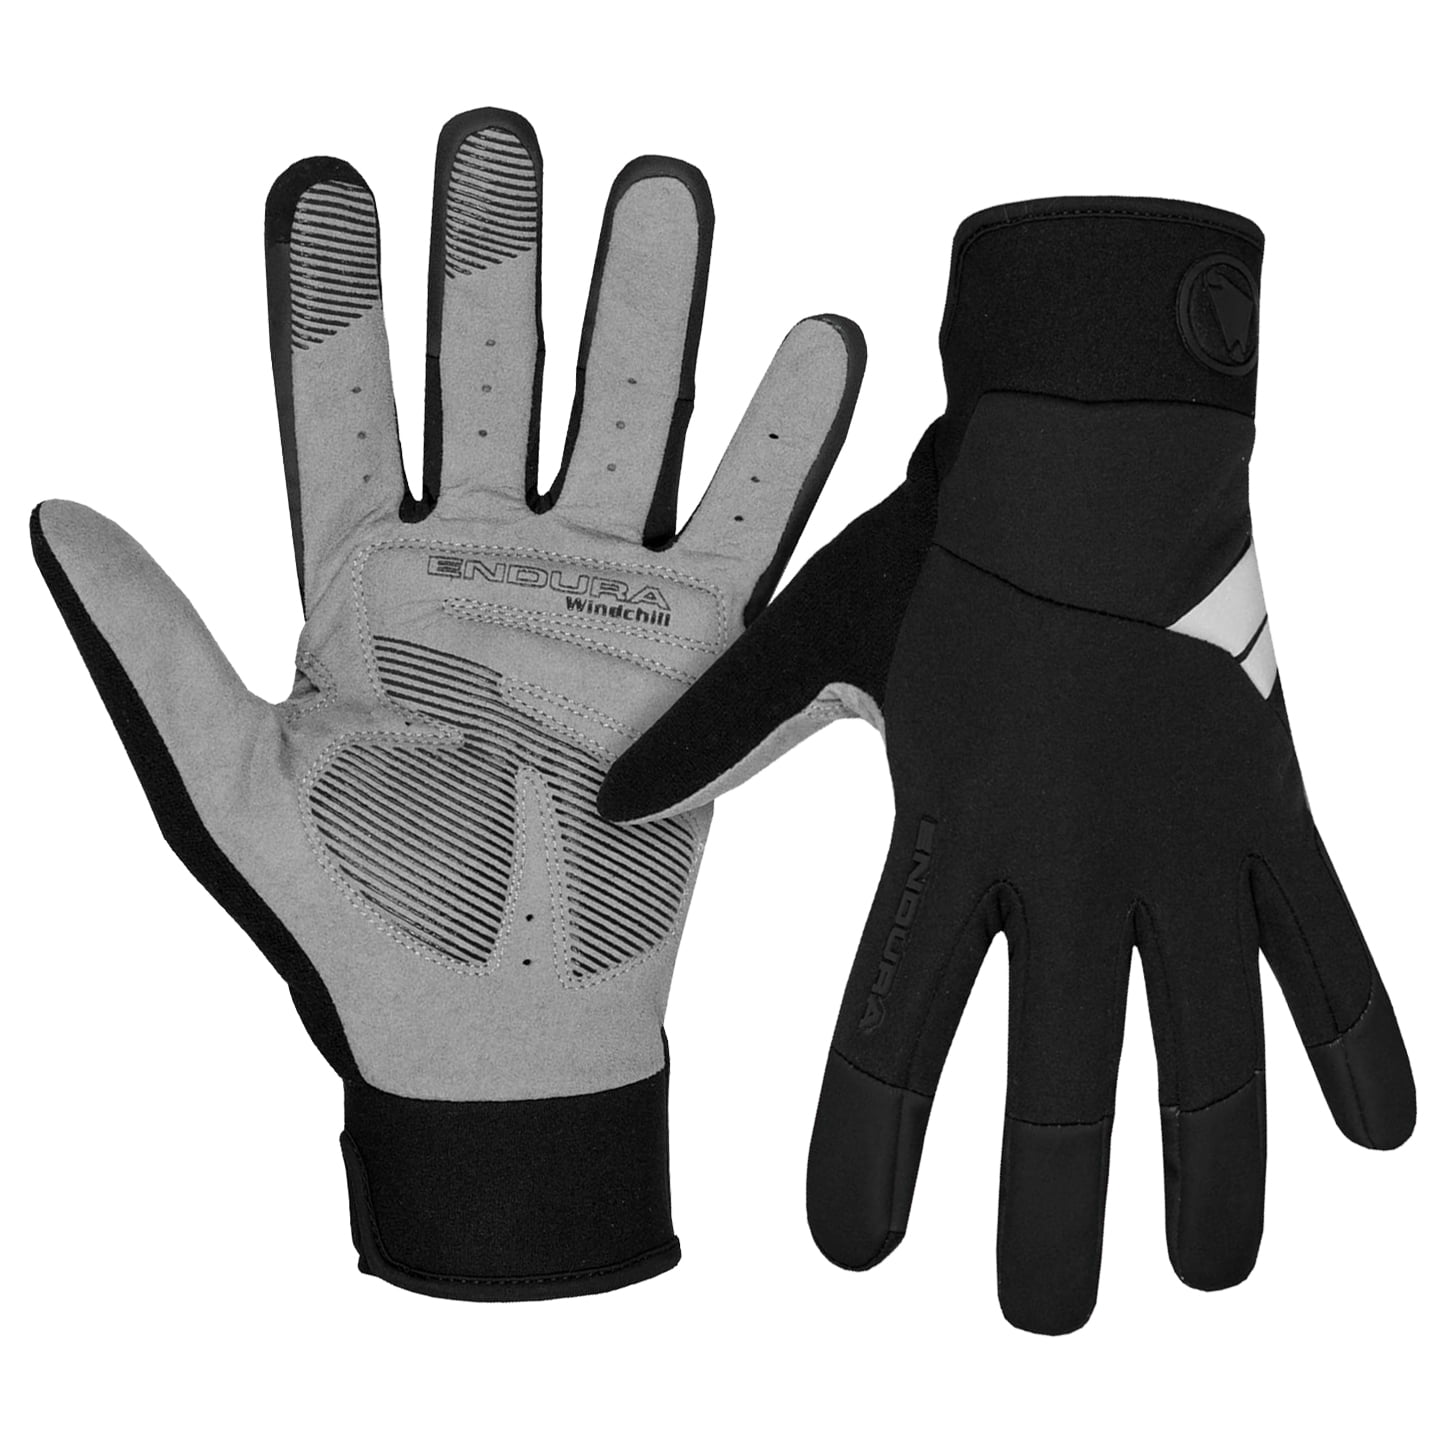 ENDURA Windchill Winter Gloves Winter Cycling Gloves, for men, size M, Cycling gloves, Cycling gear